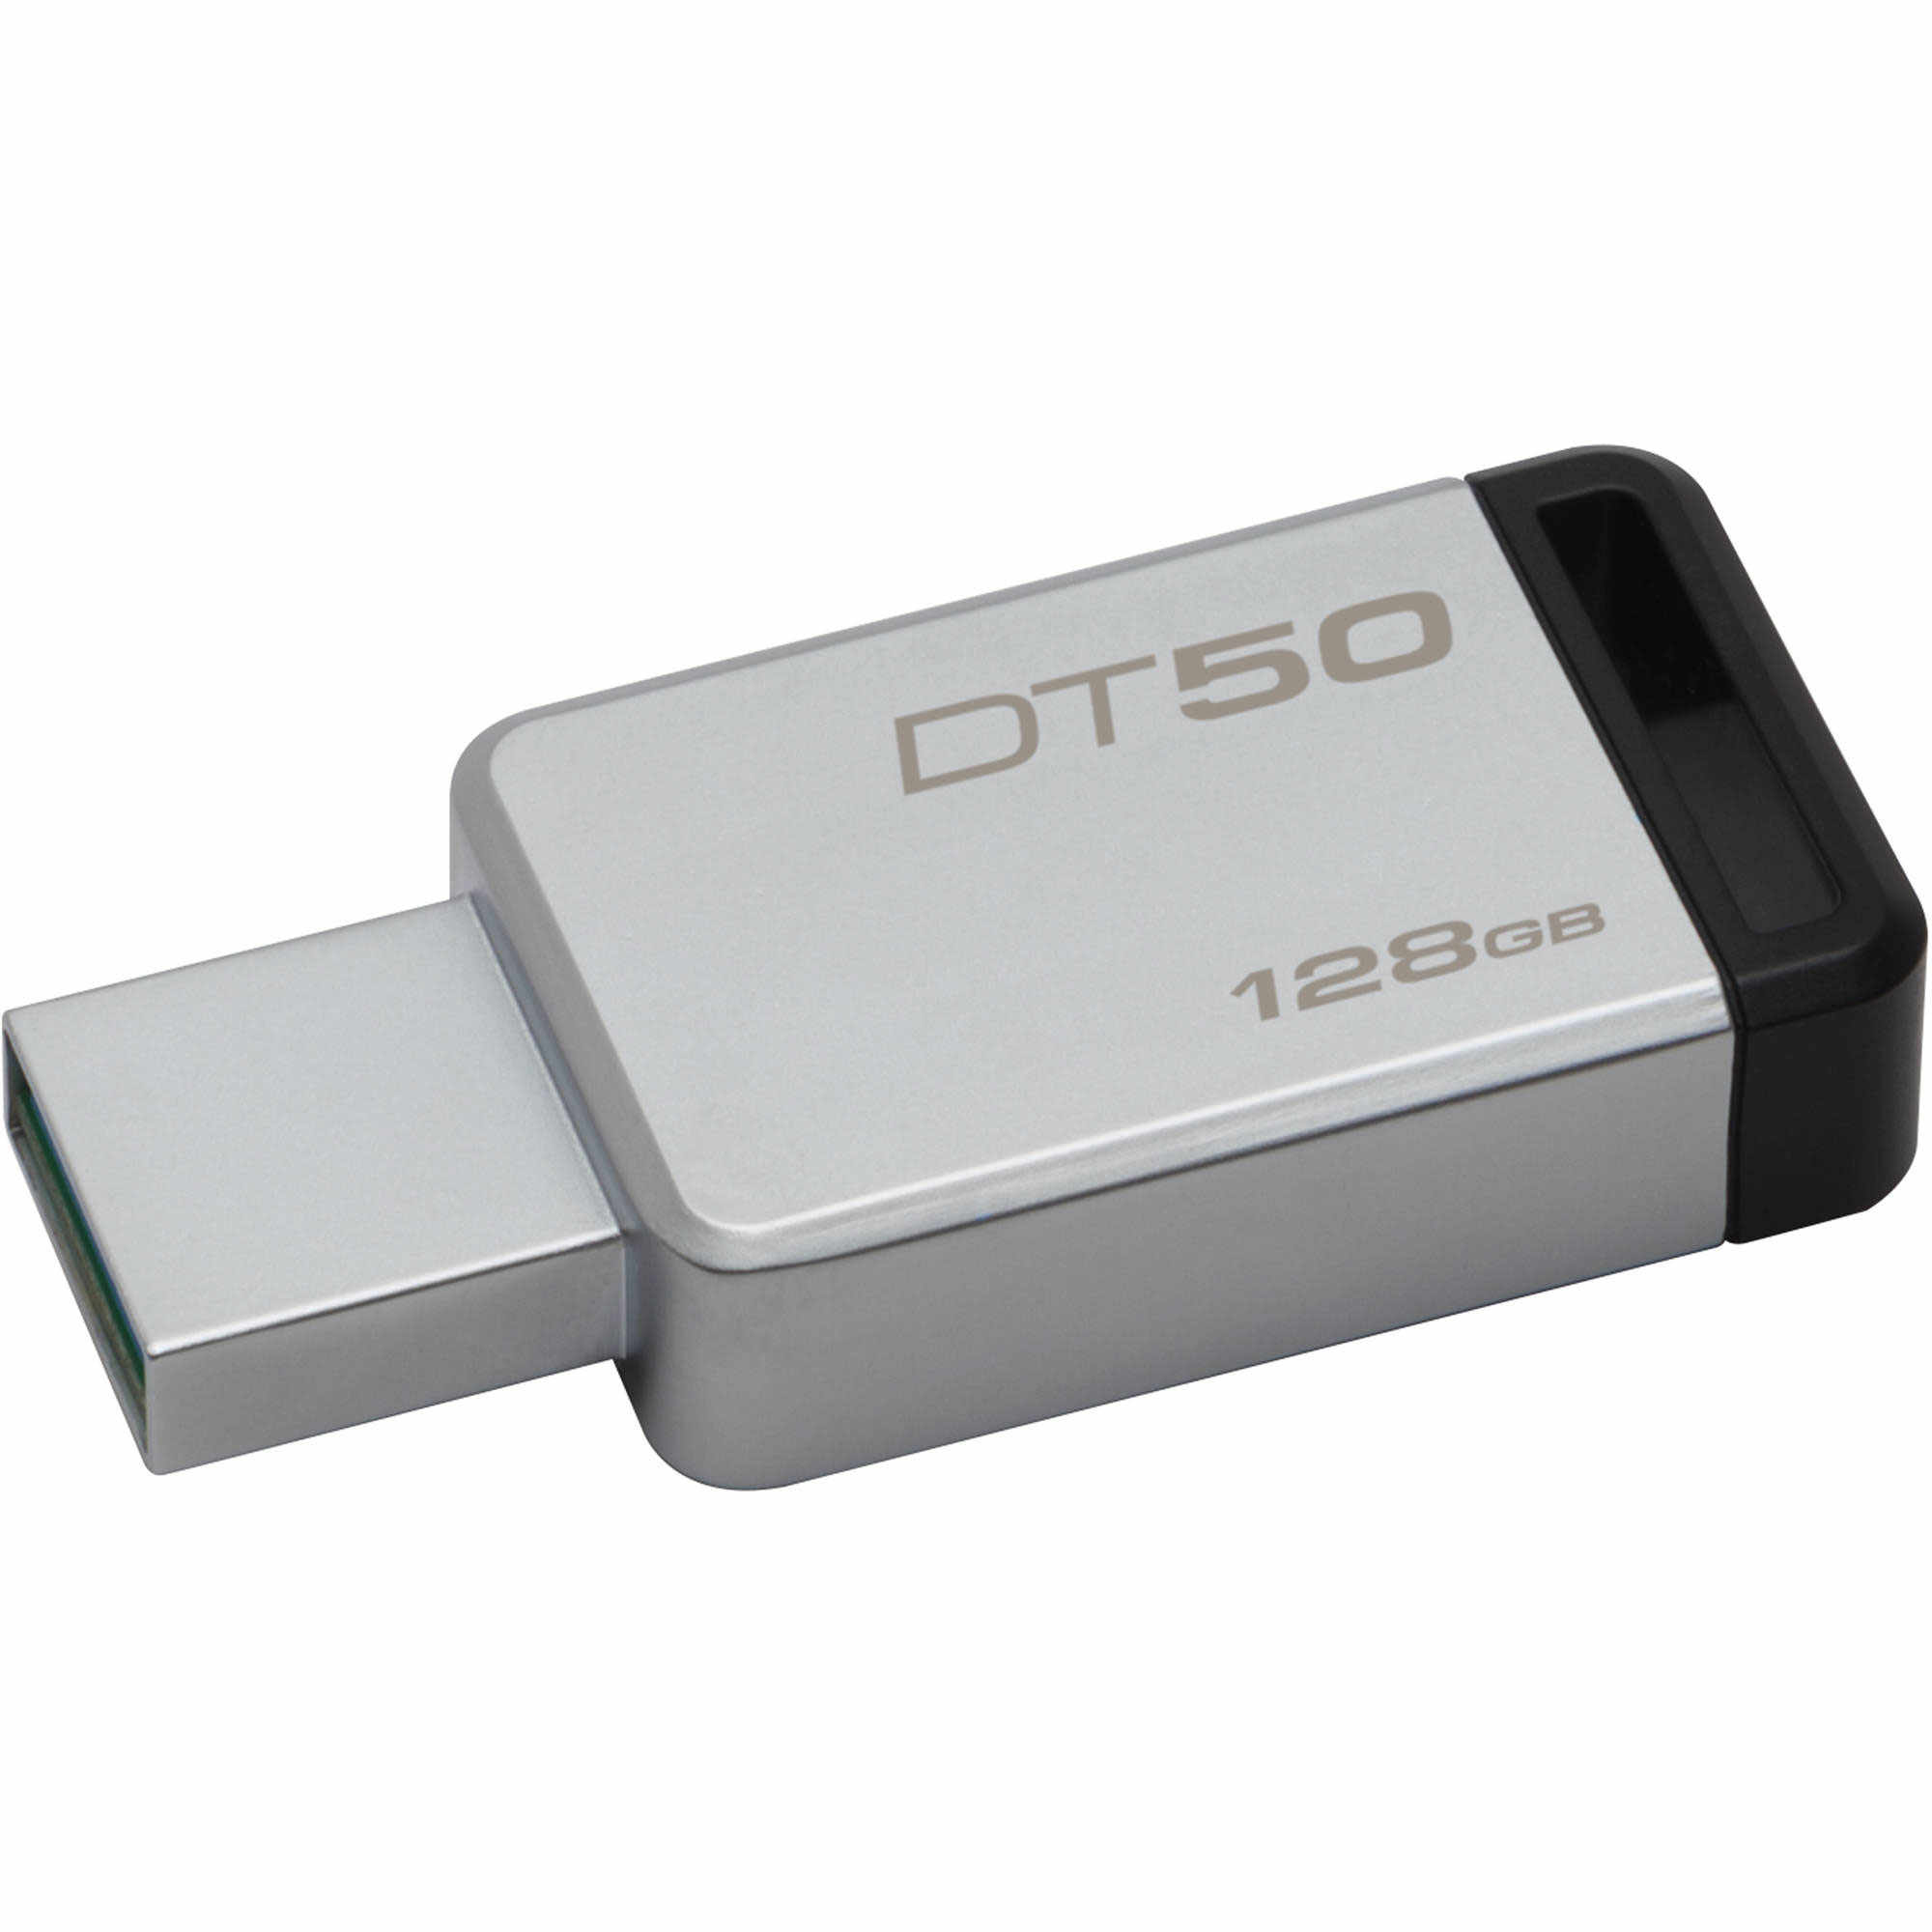 Memorie USB Kingston DT50/128GB, 128GB, USB 3.0, Gri